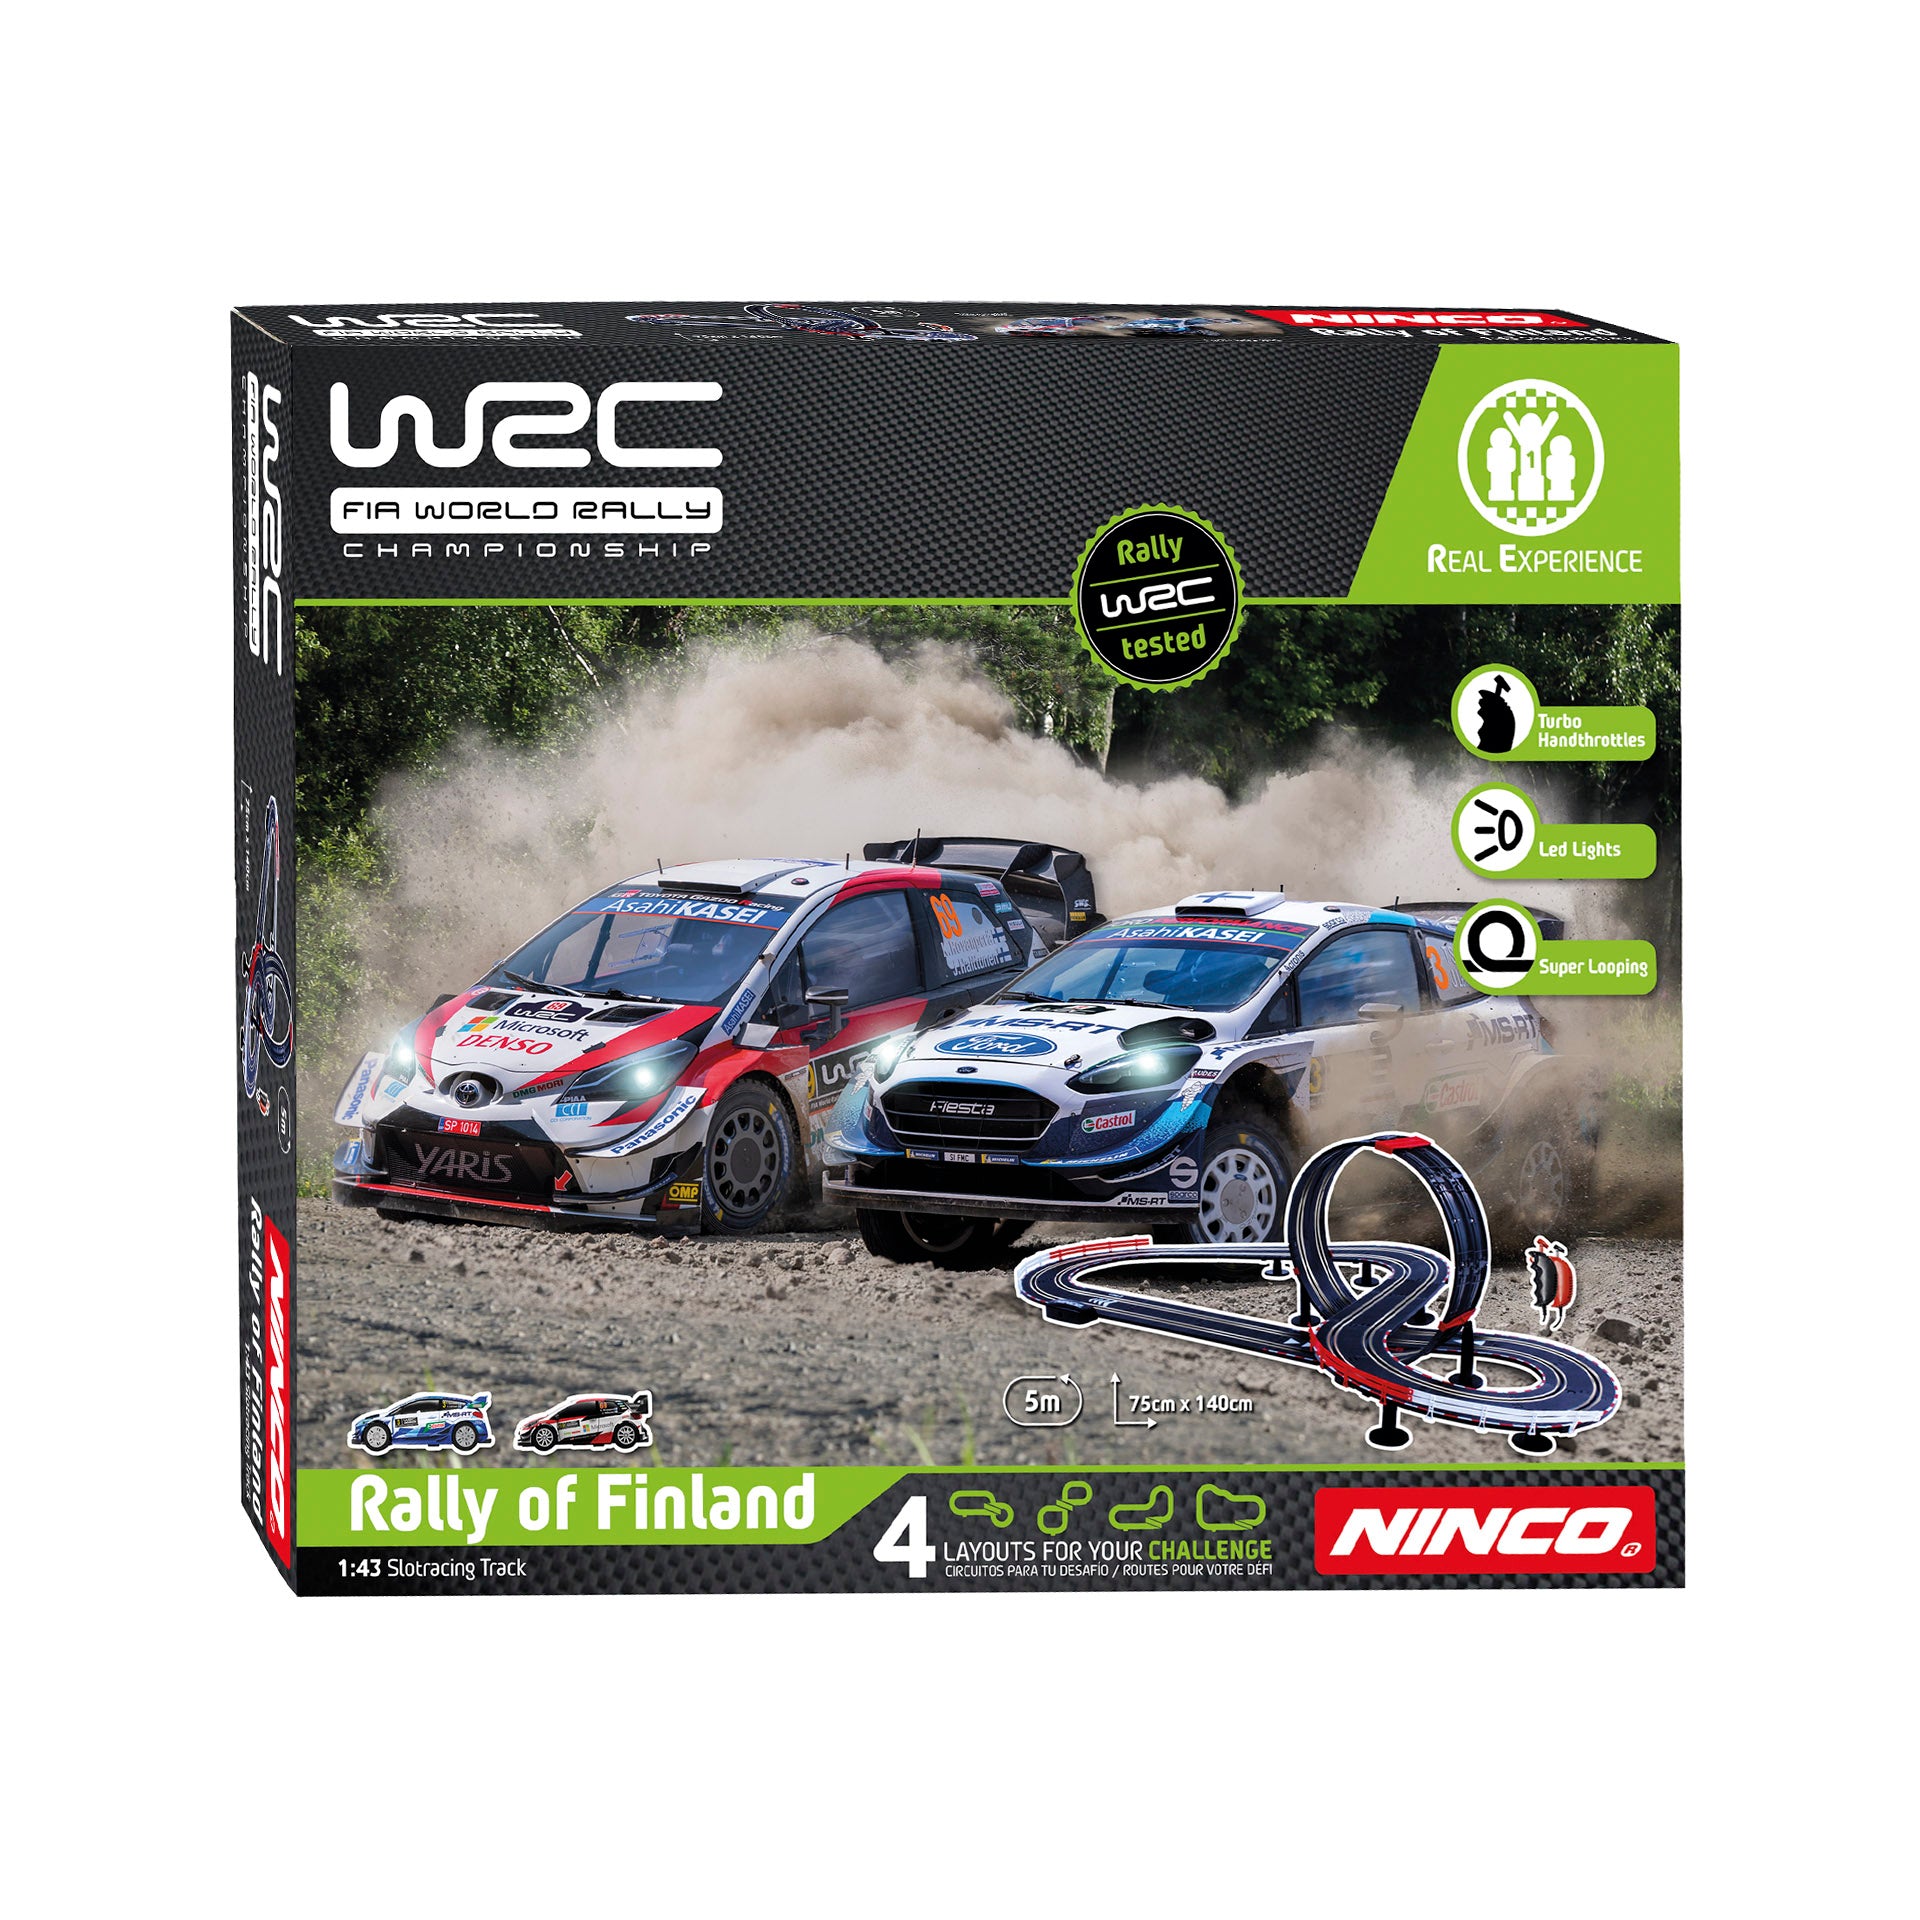 Ninco Circuito WRC Rally of Finland